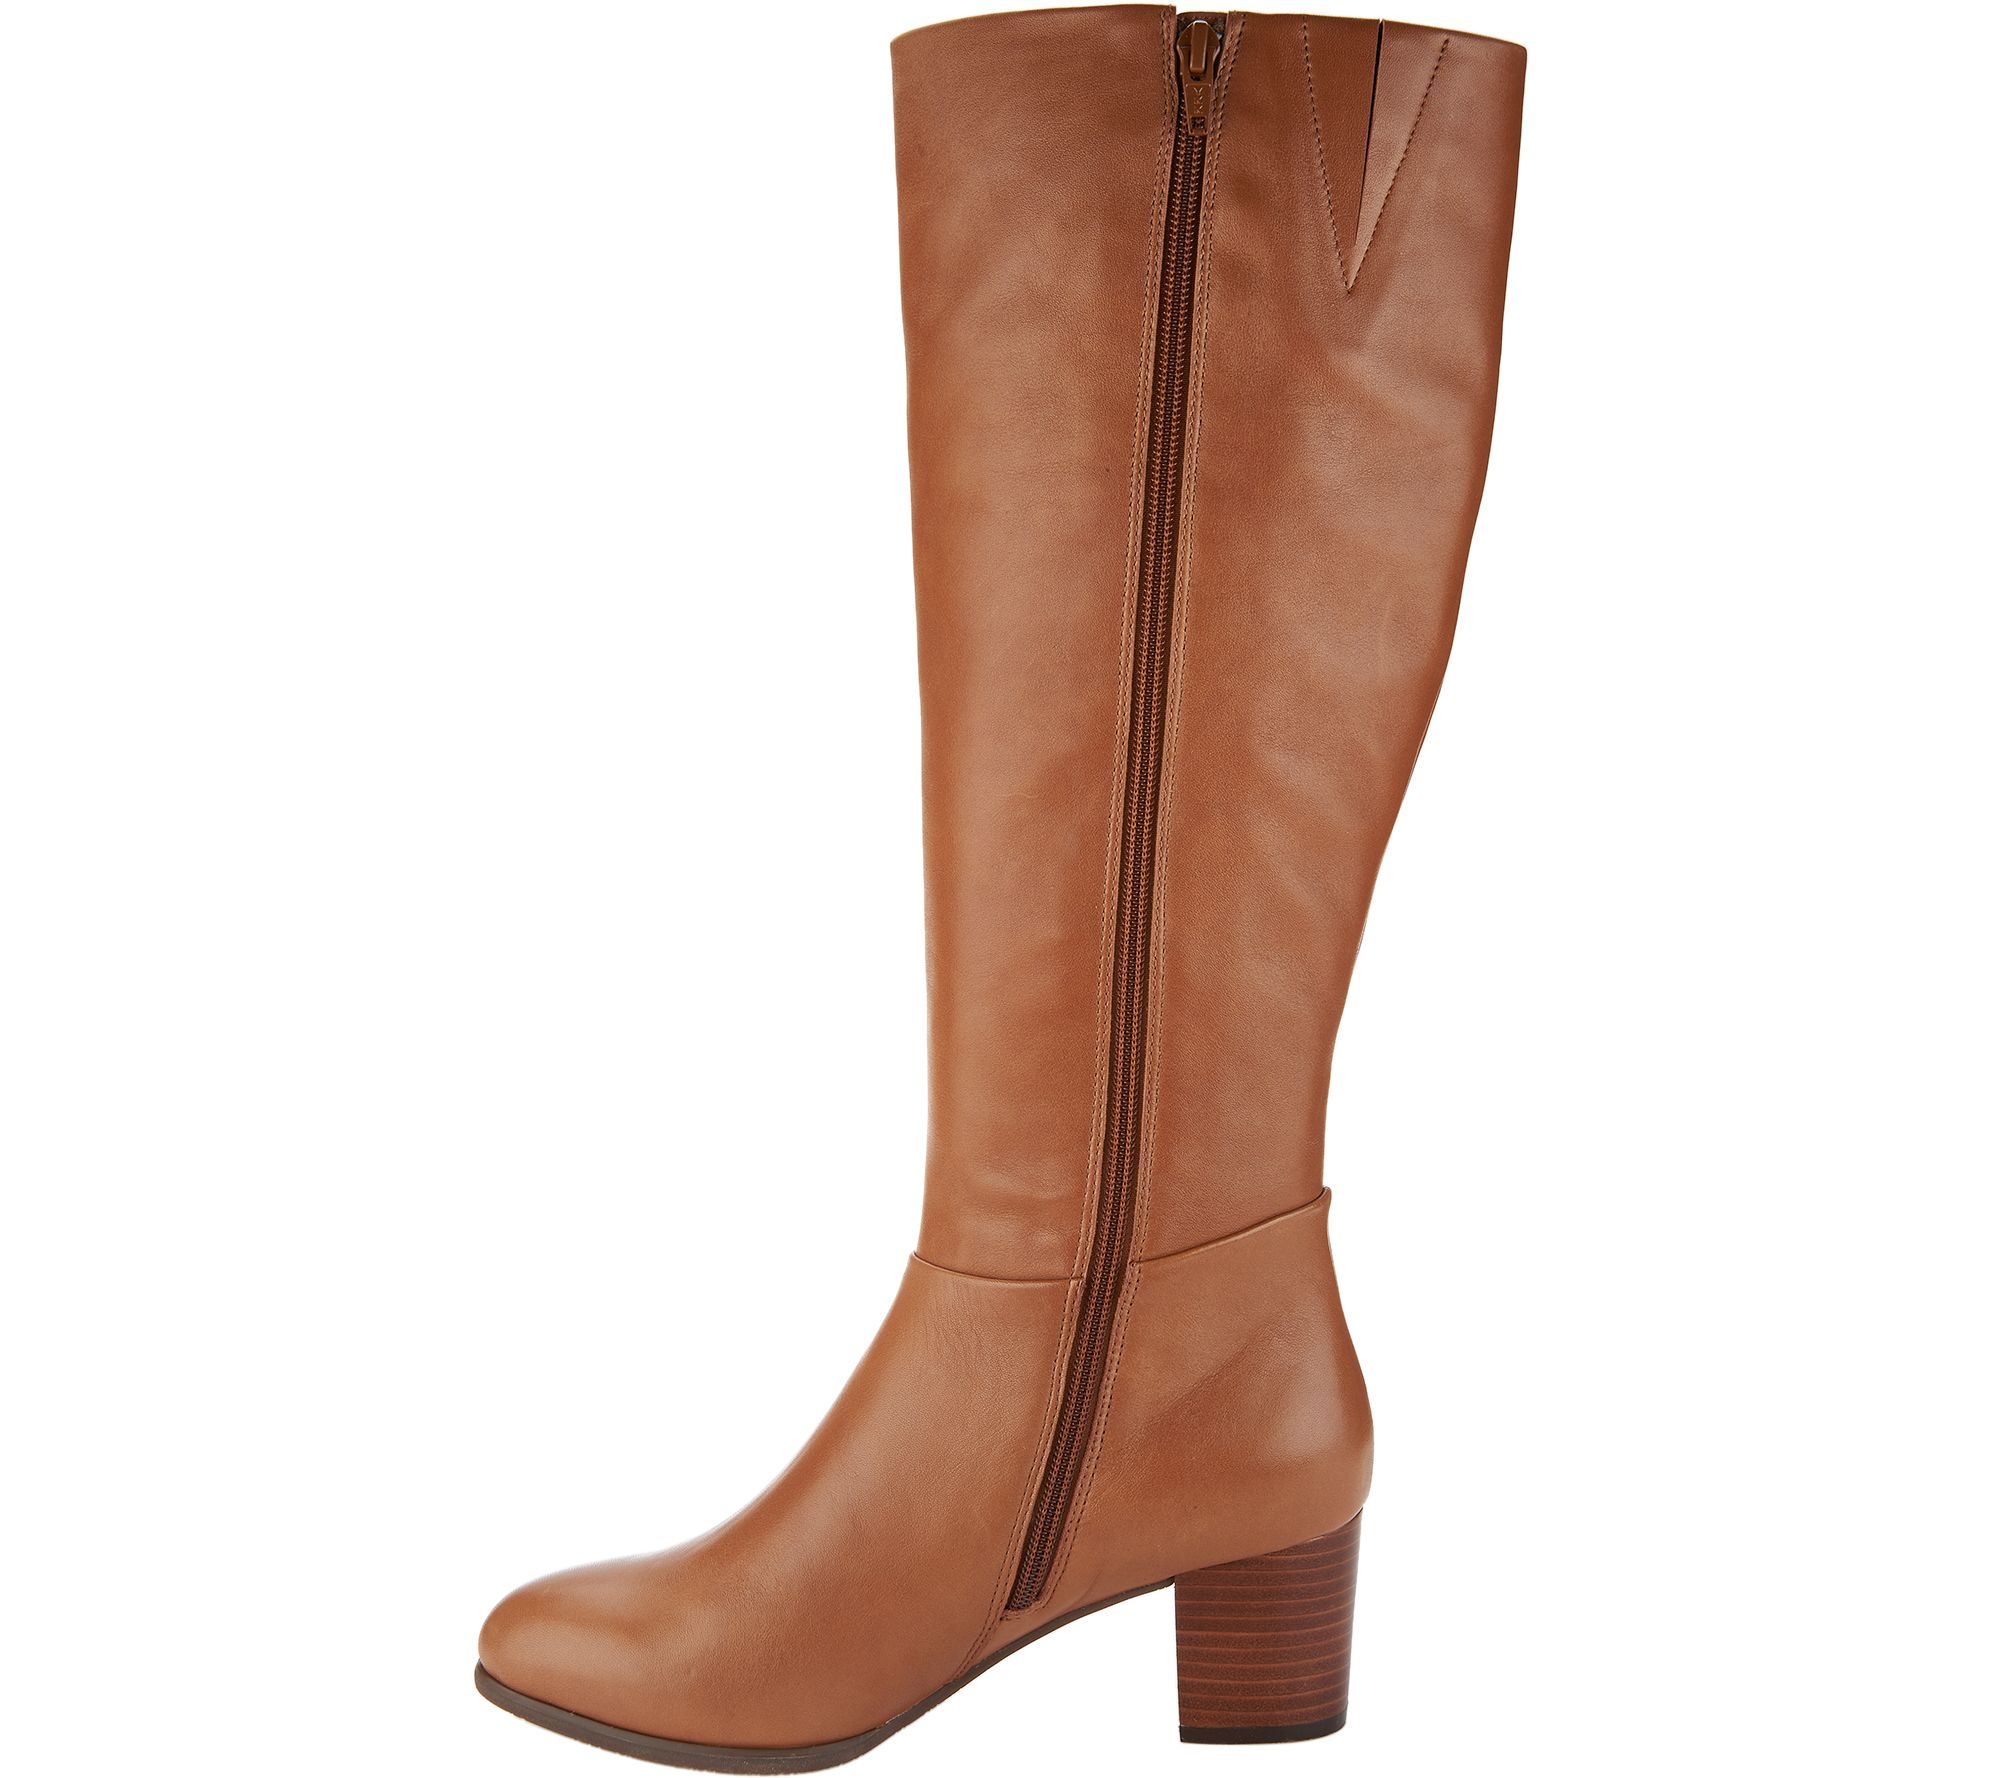 Vionic Leather Tall Shaft Boots - Tahlia - QVC.com